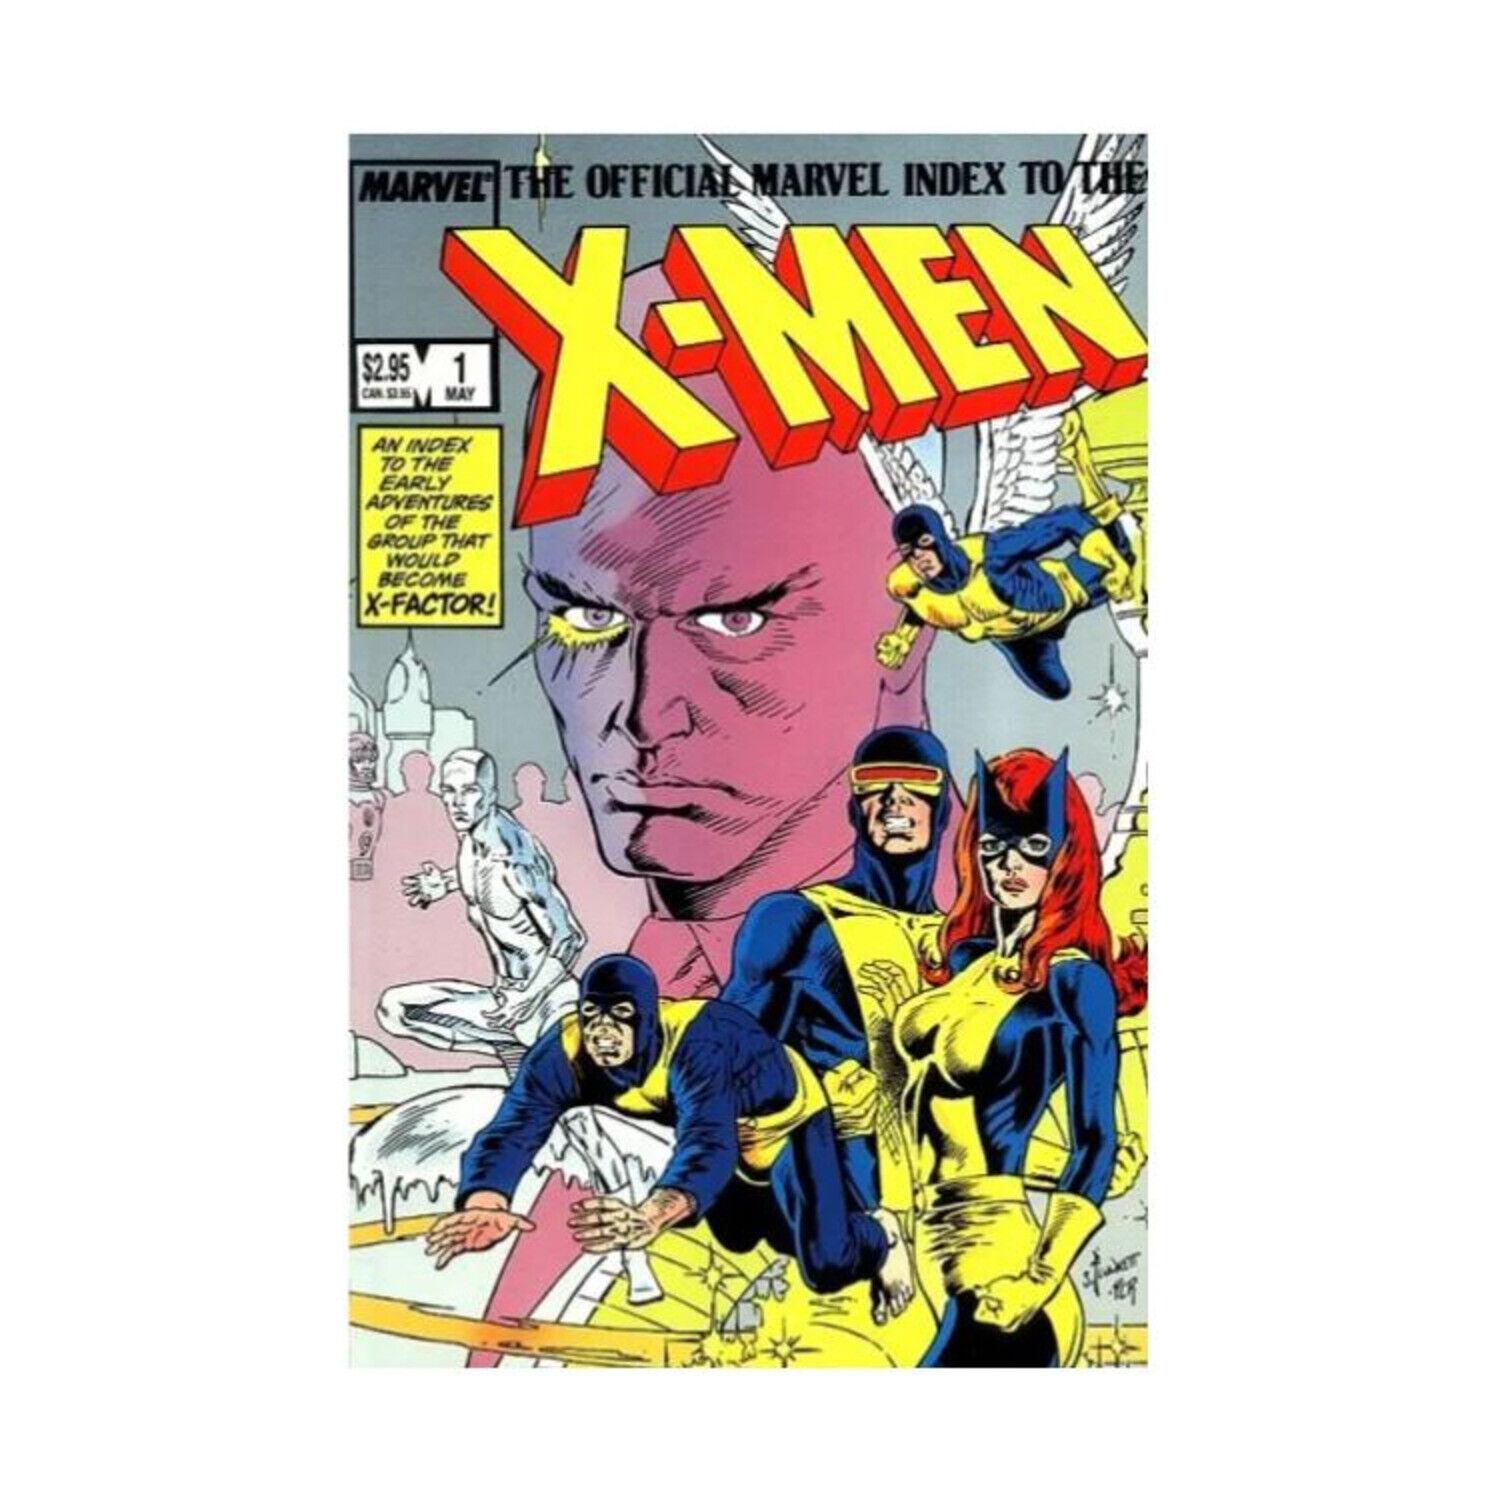 Marvel X-Men Official Marvel Index to the X-Men #1 EX